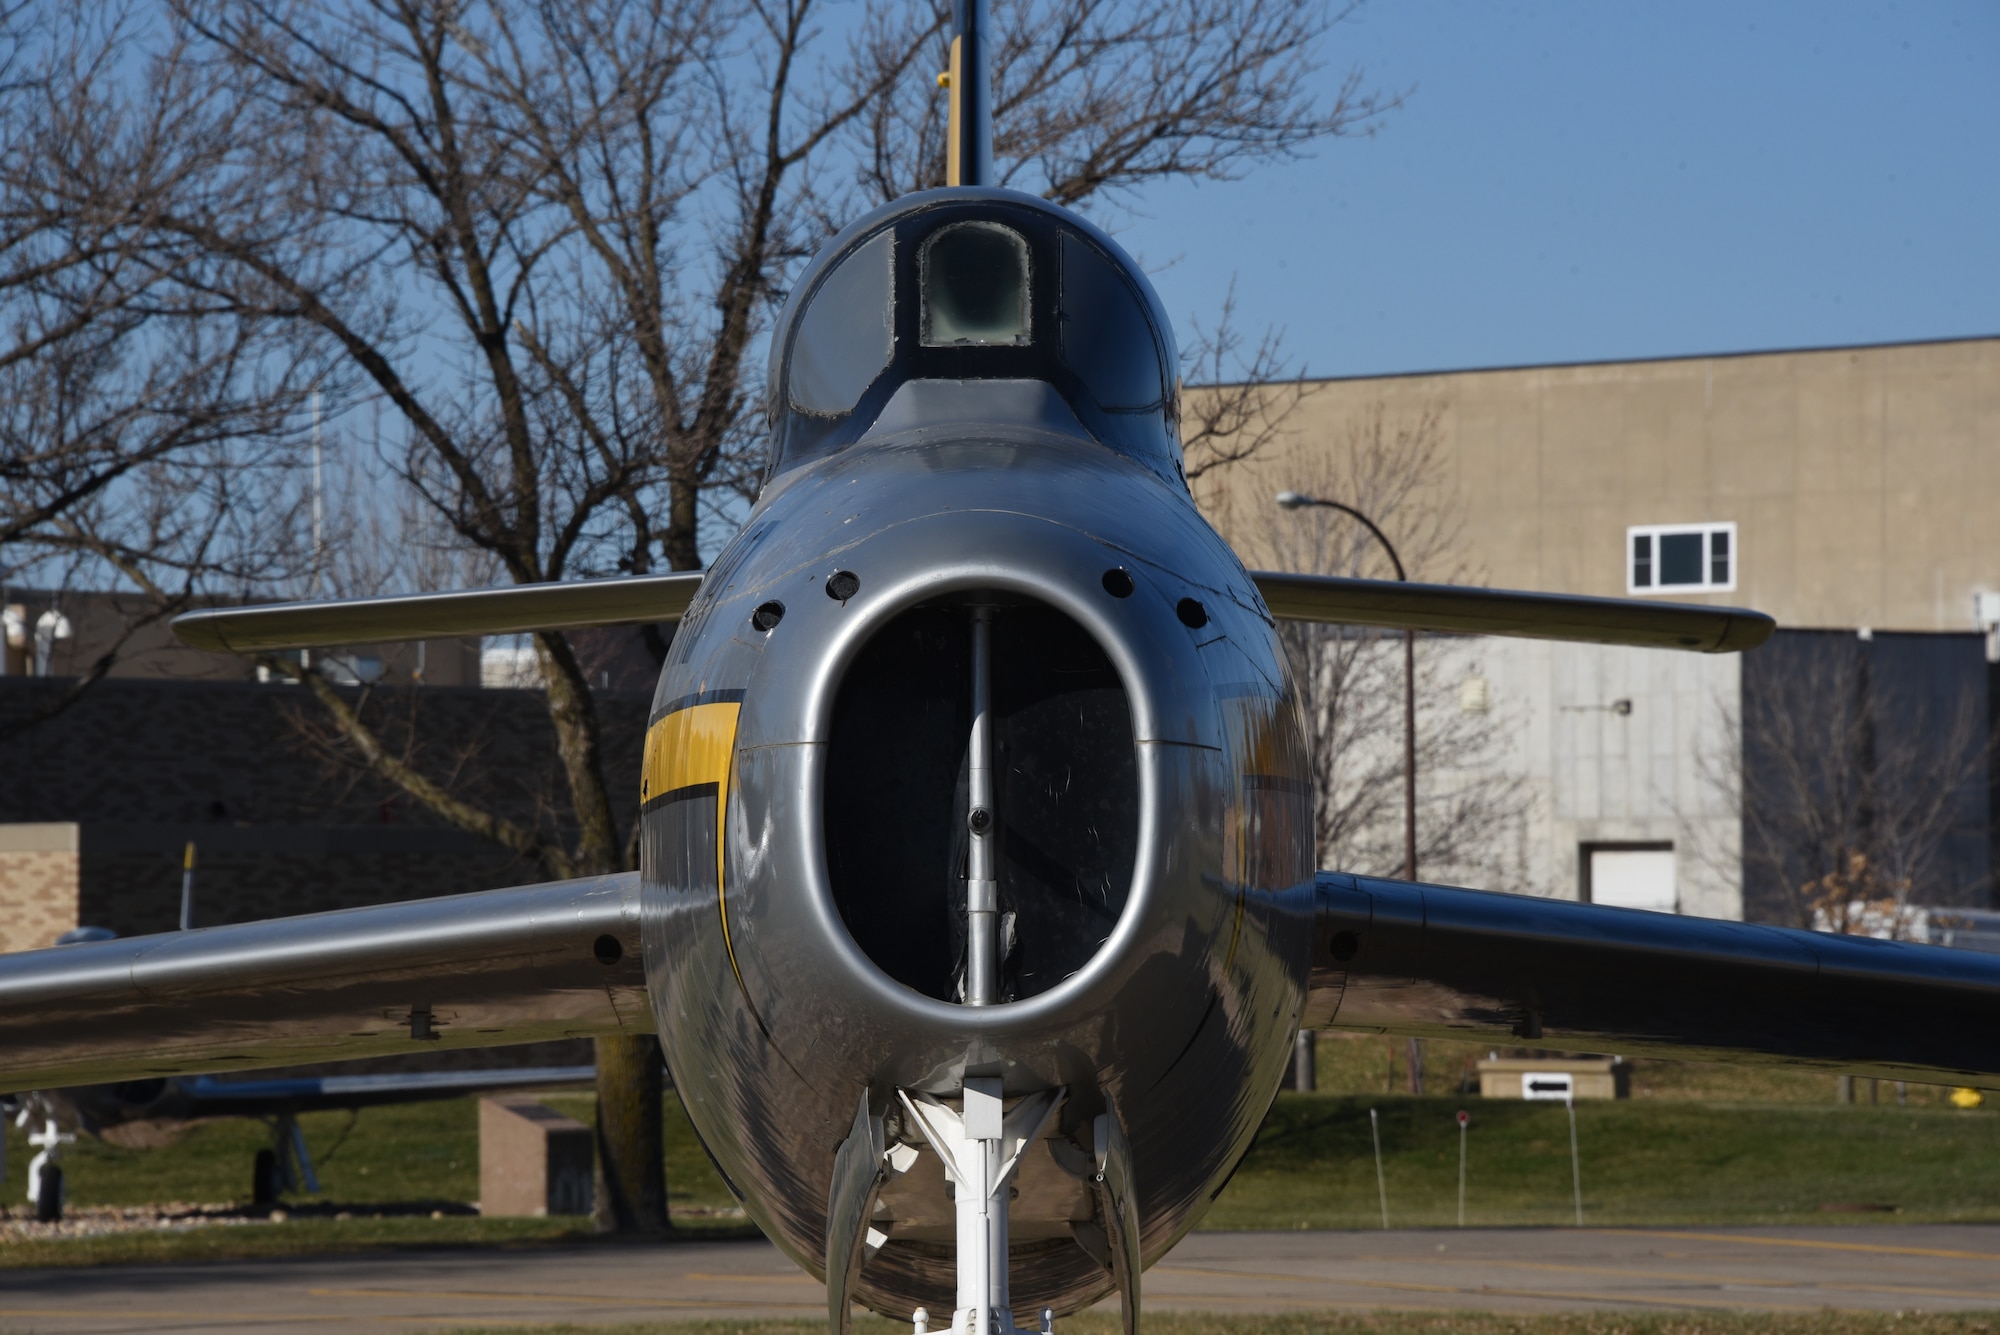 F-84 Fighter jet